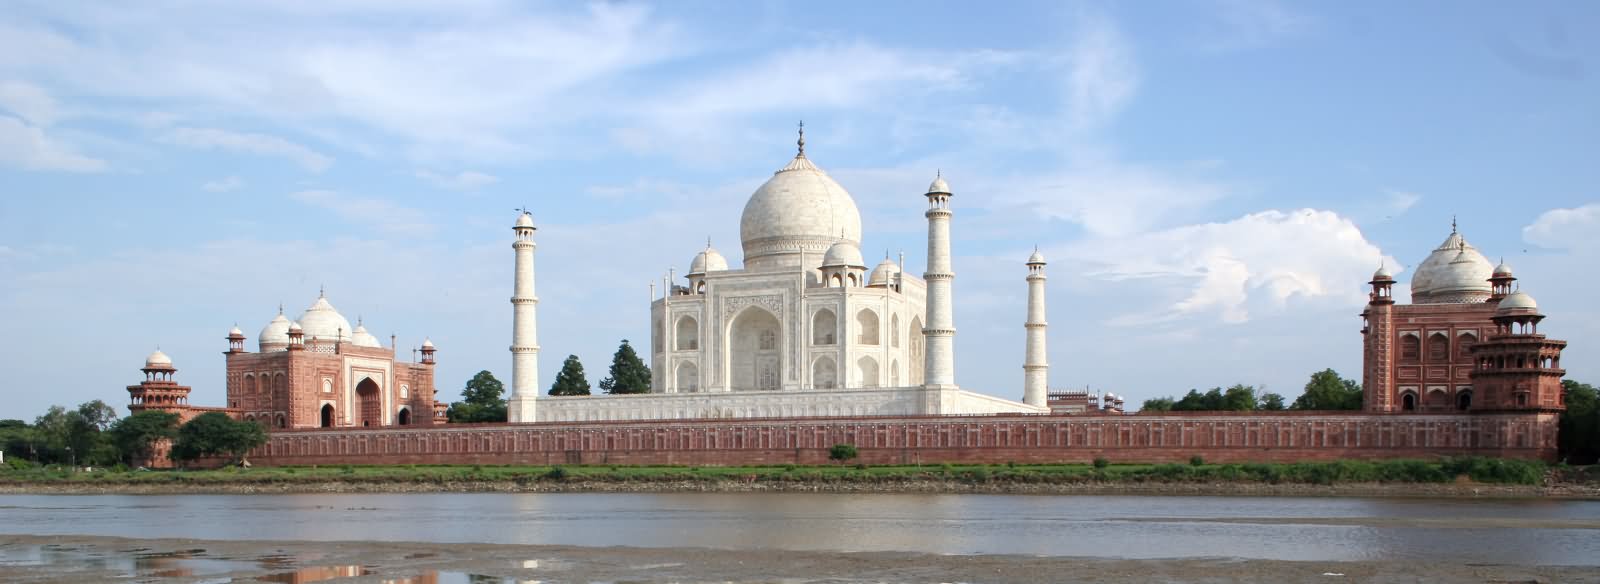 Northern View Of Taj Mahal Across The Yamuna